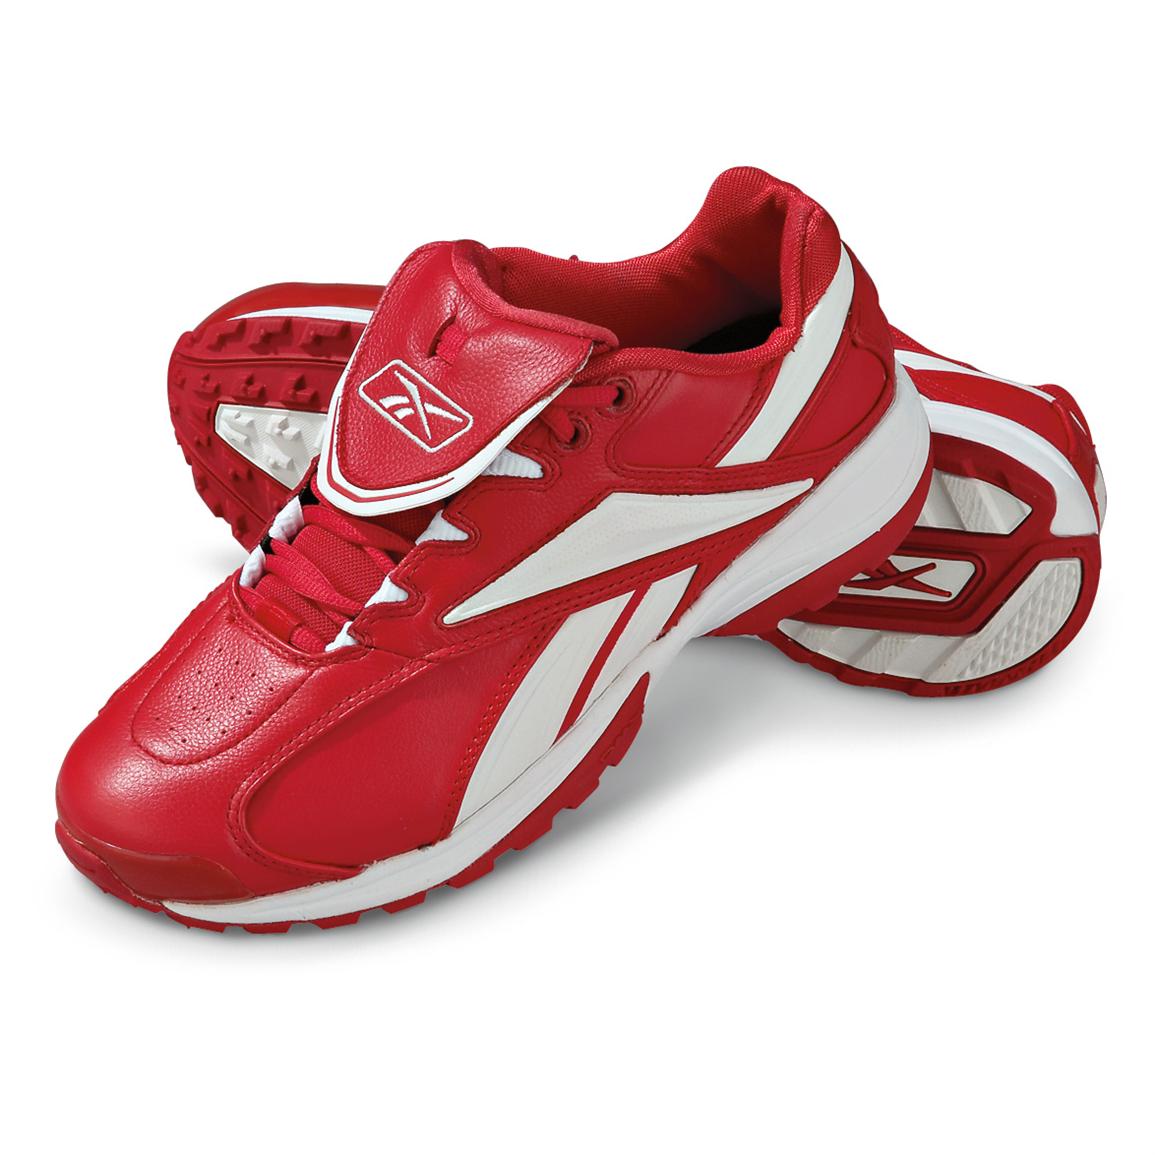 Men s Reebok   Vero FL Turf Trainer Low Athletic Shoes  Red 